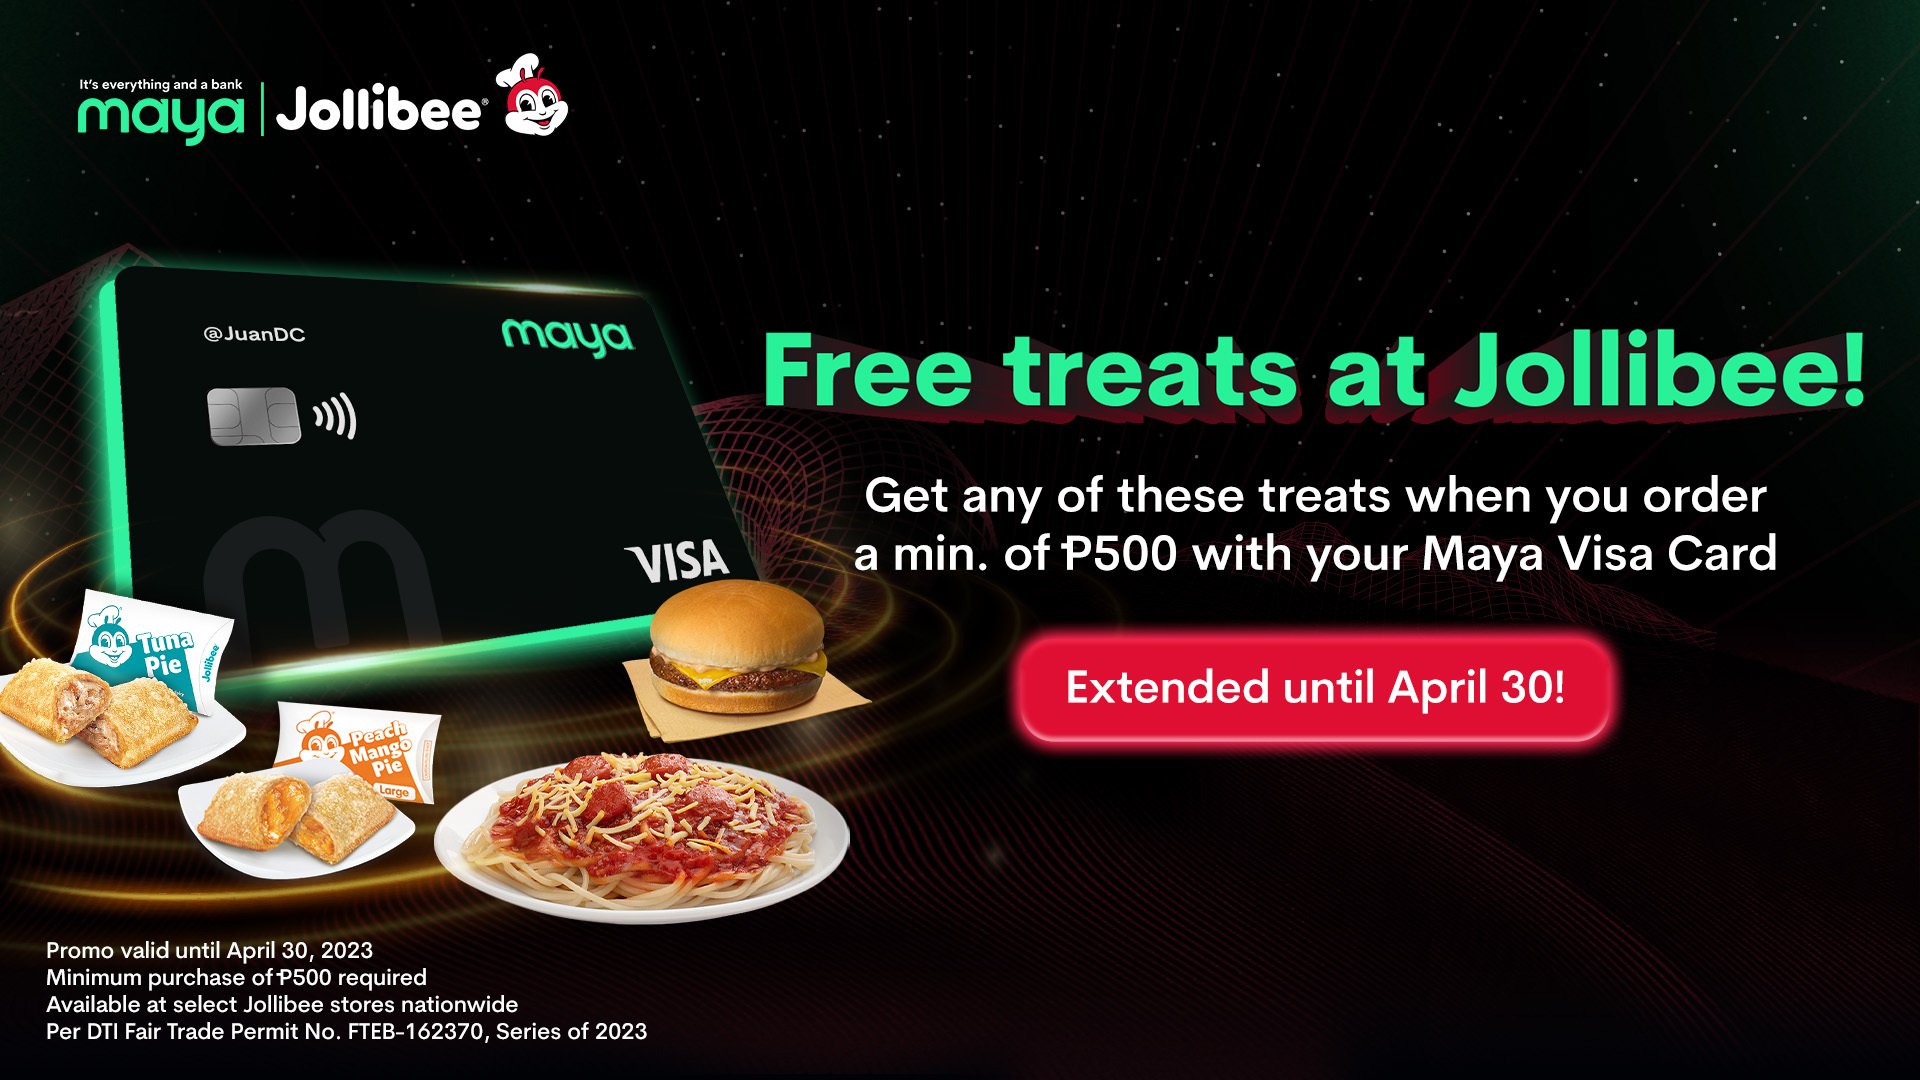 FREE Treats at Jollibee with your Maya Visa Card!